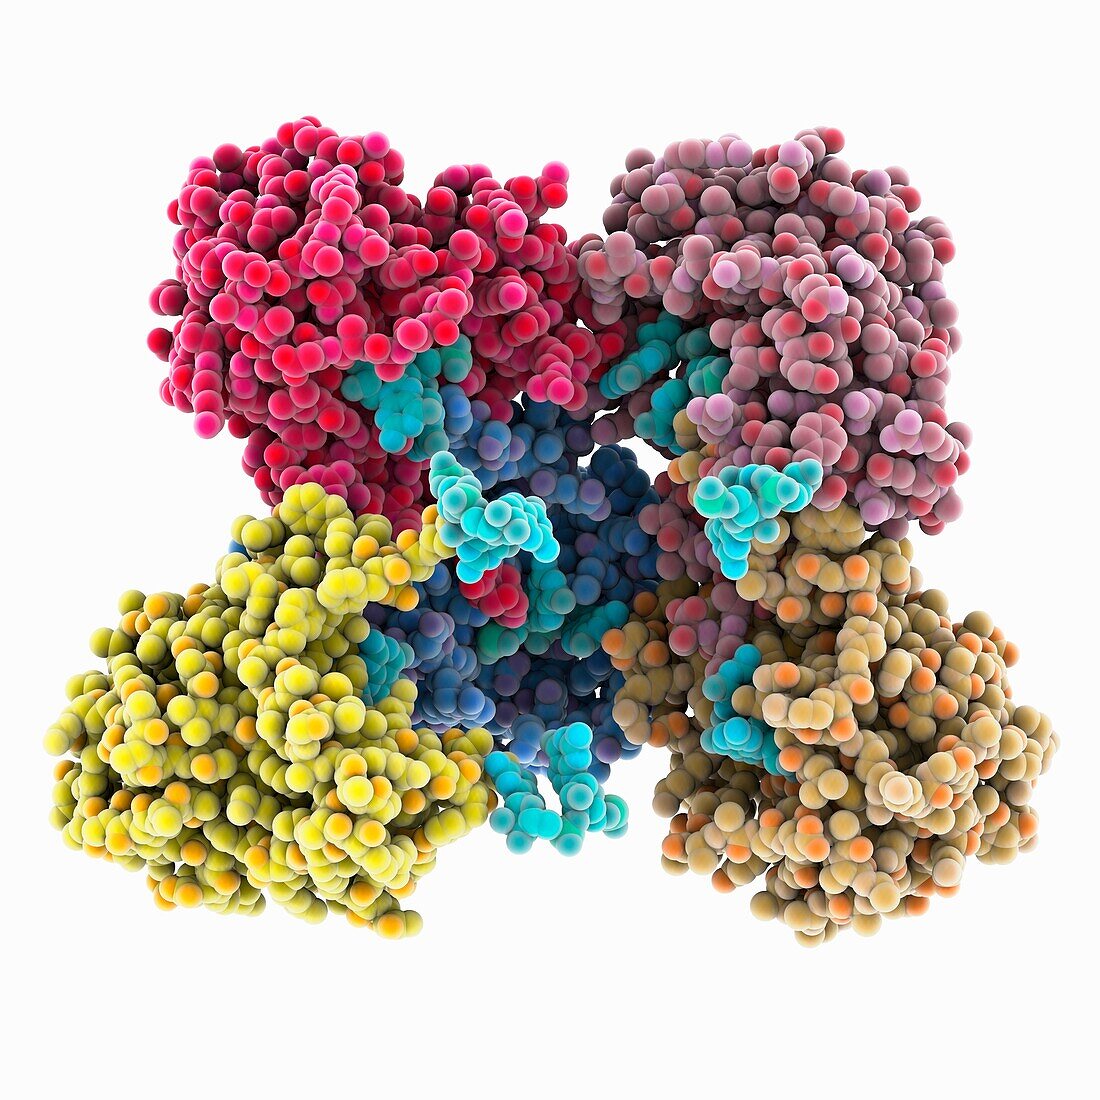 NanoRNase C complexed with RNA, molecular model